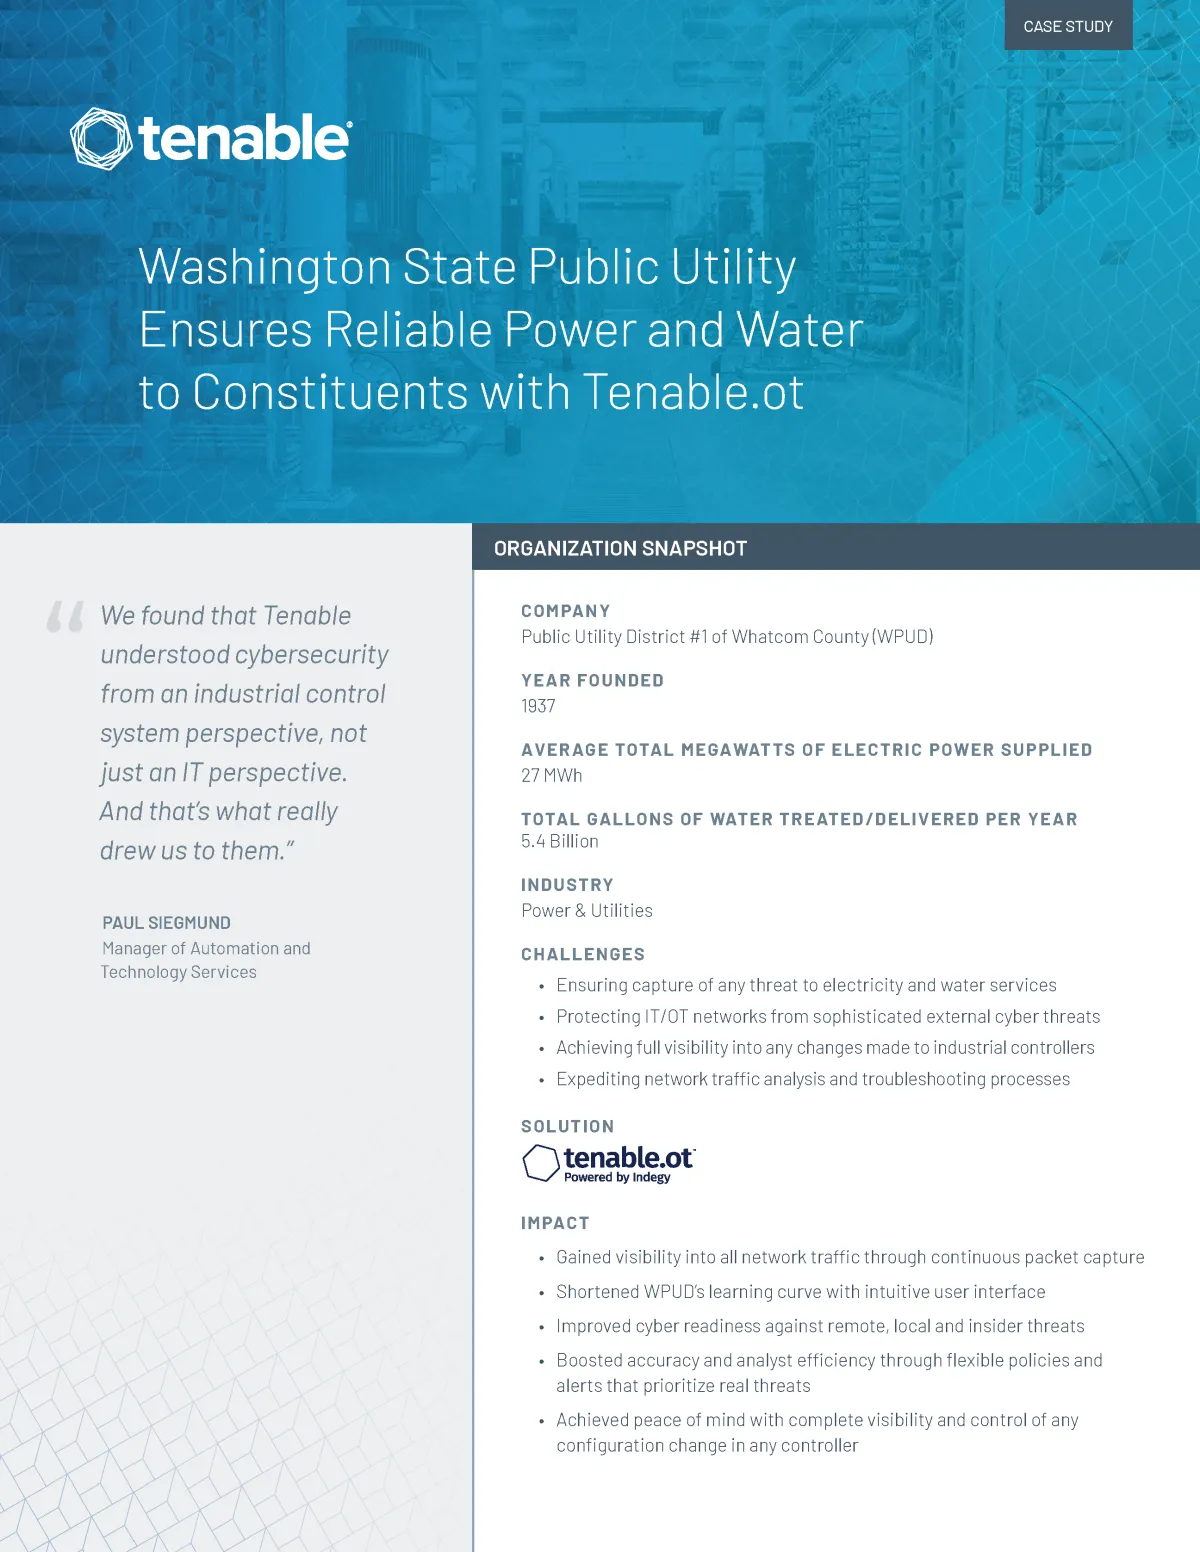 Case Study: Washington State PUC and Tenable.ot